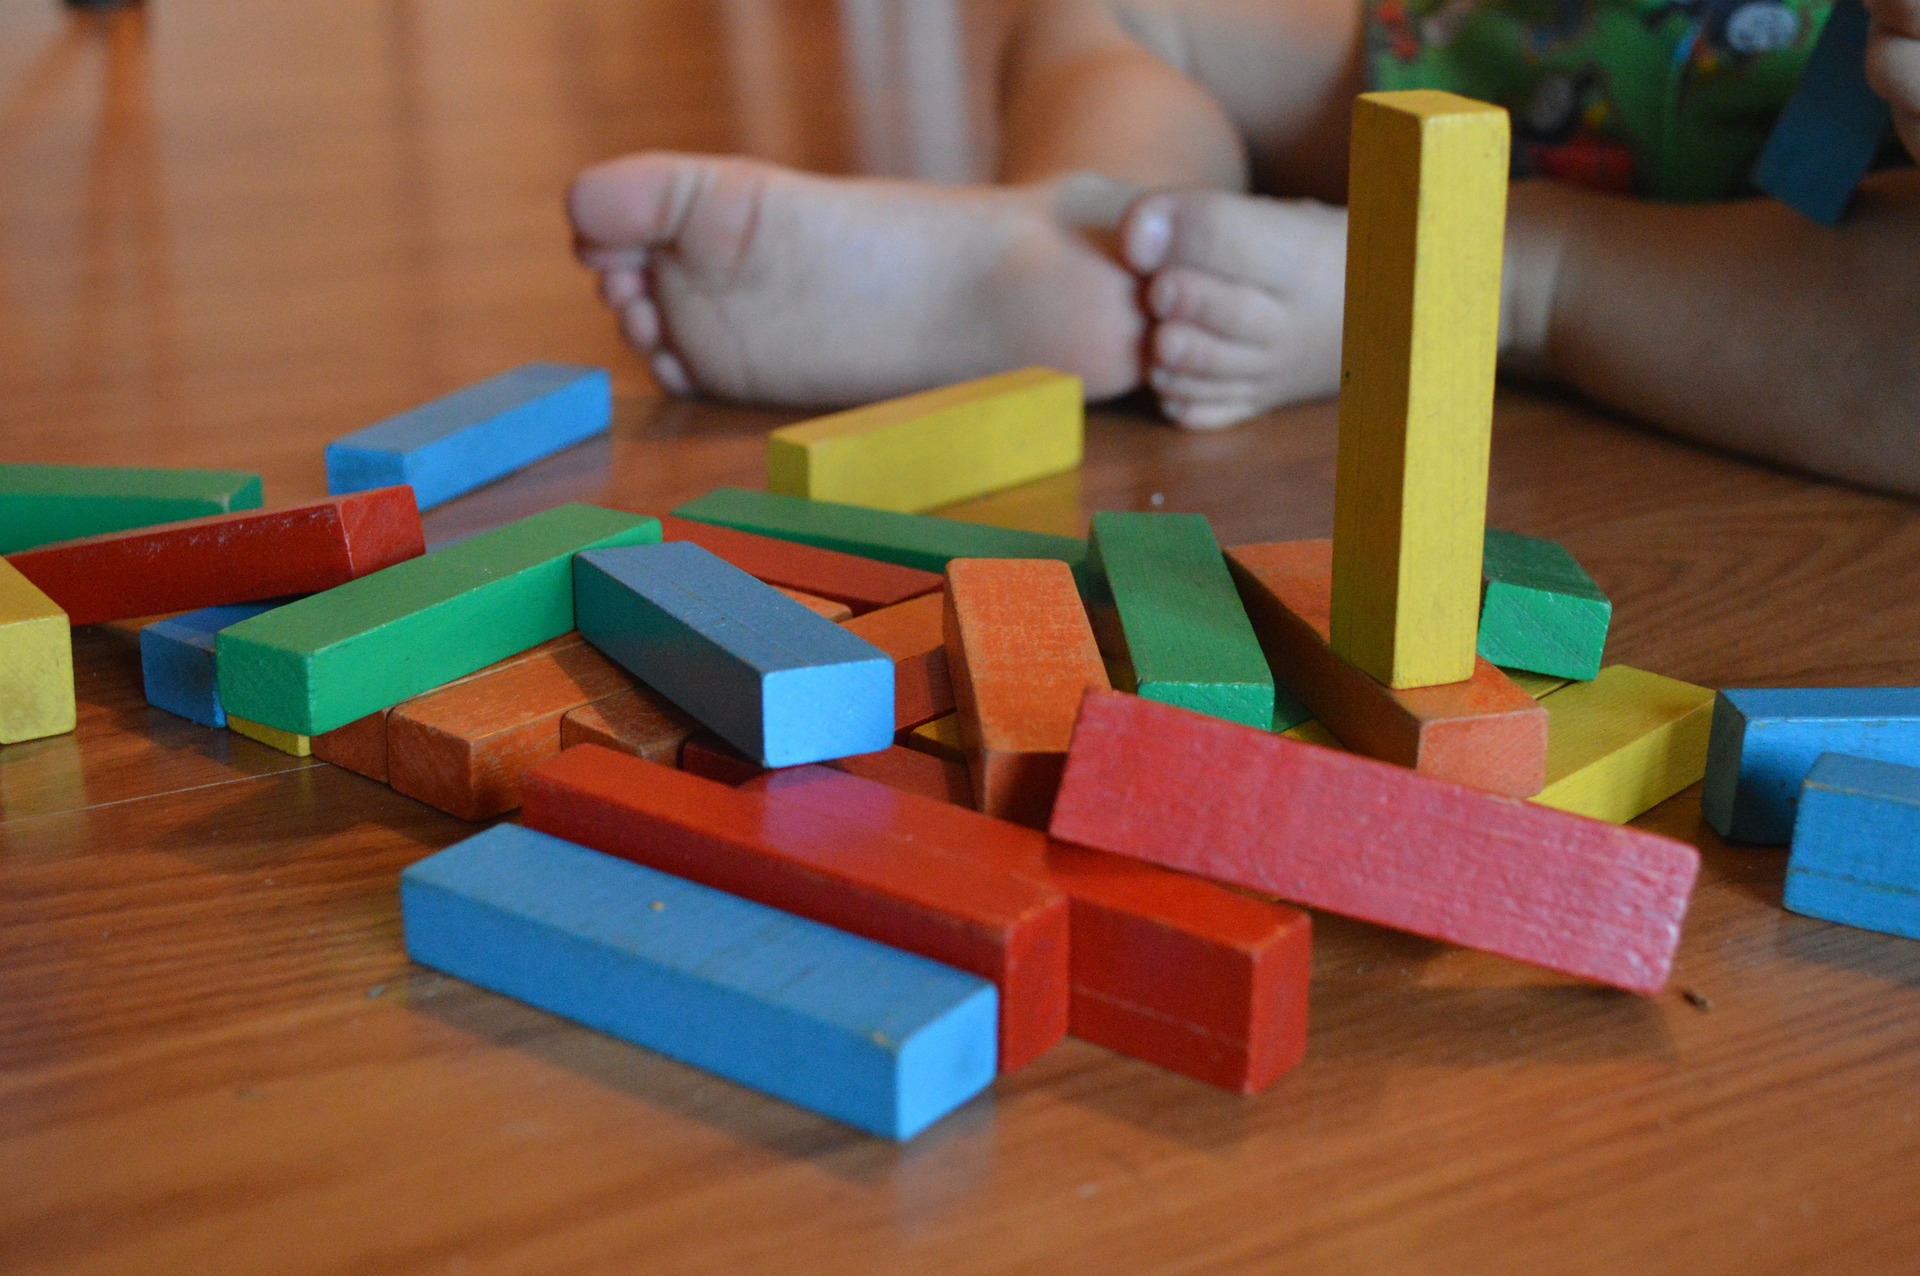 children's blocks Image by bethL from Pixabay